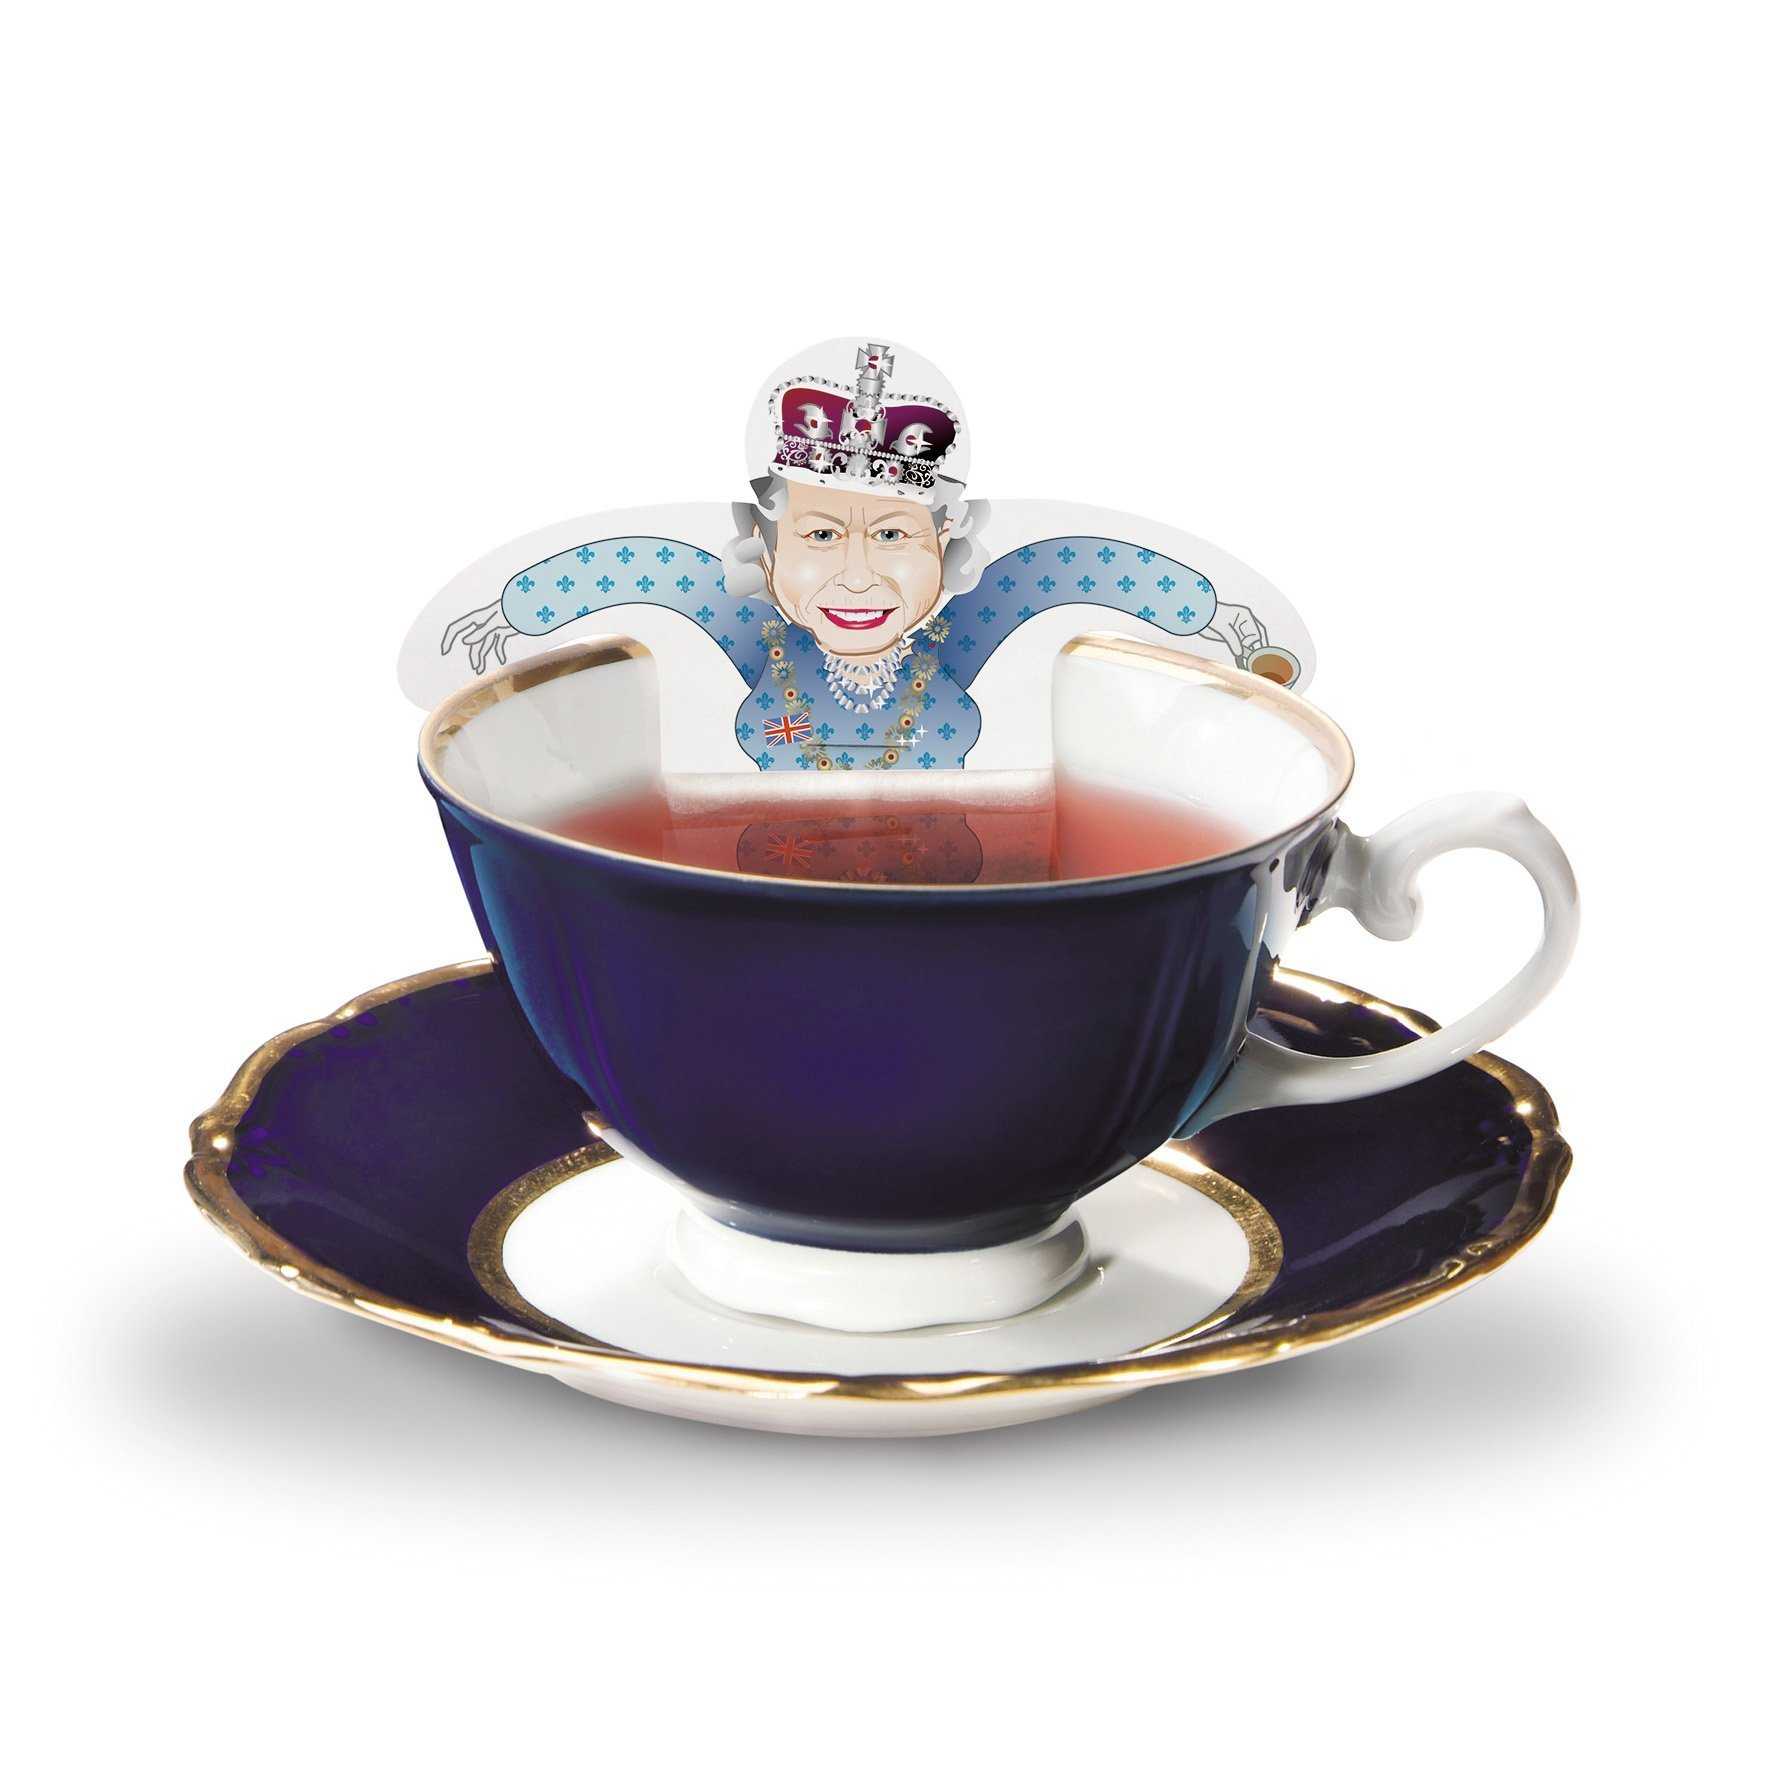 Bild The Royal Tea Party